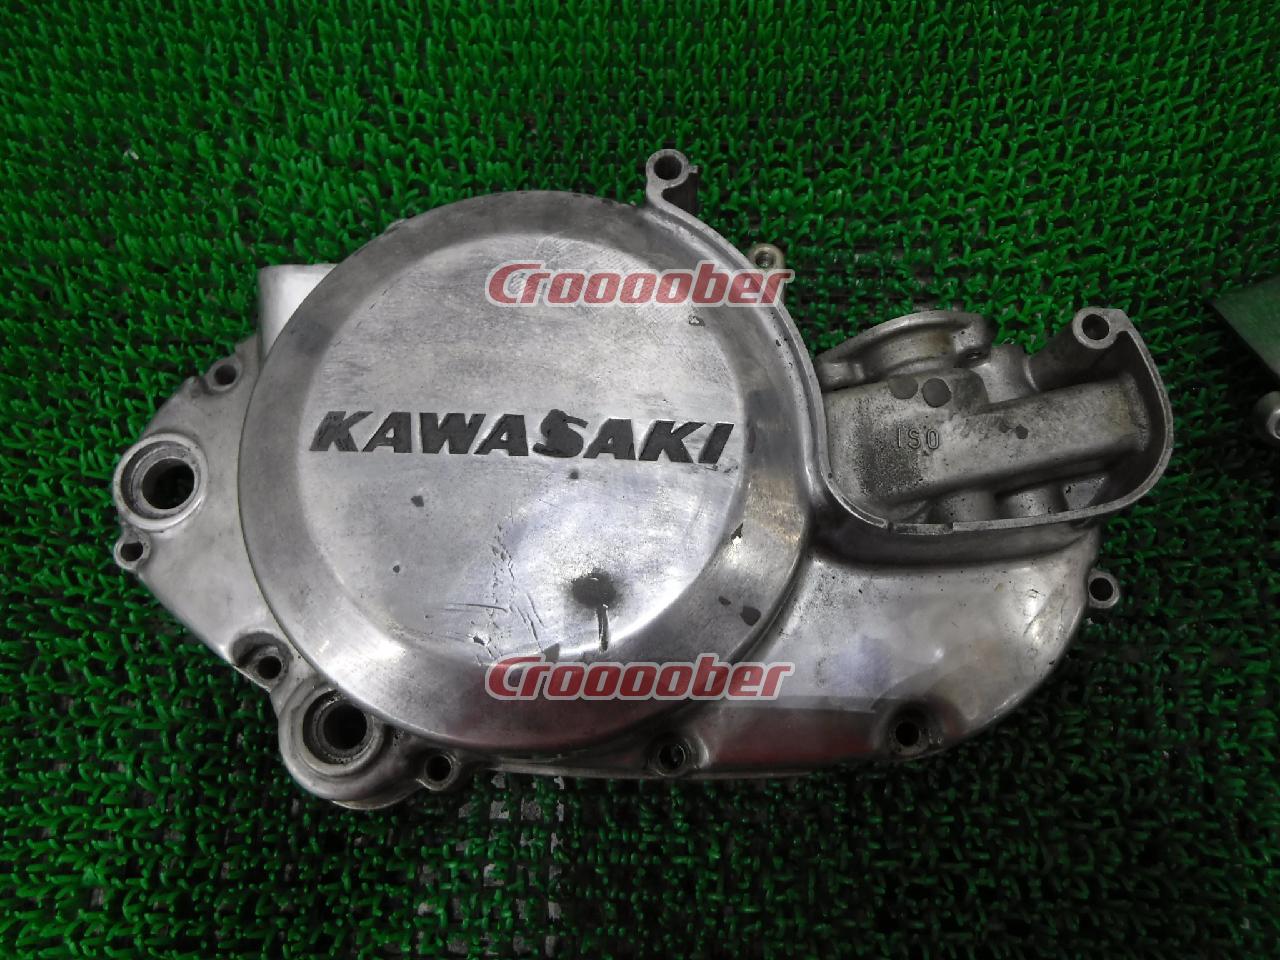 9KAWASAKI/カワサキ 純正クラッチカバー/Rクランクケースカバー | エンジン・フレーム エンジンパーツ(二輪)パーツの通販なら |  Croooober(クルーバー)